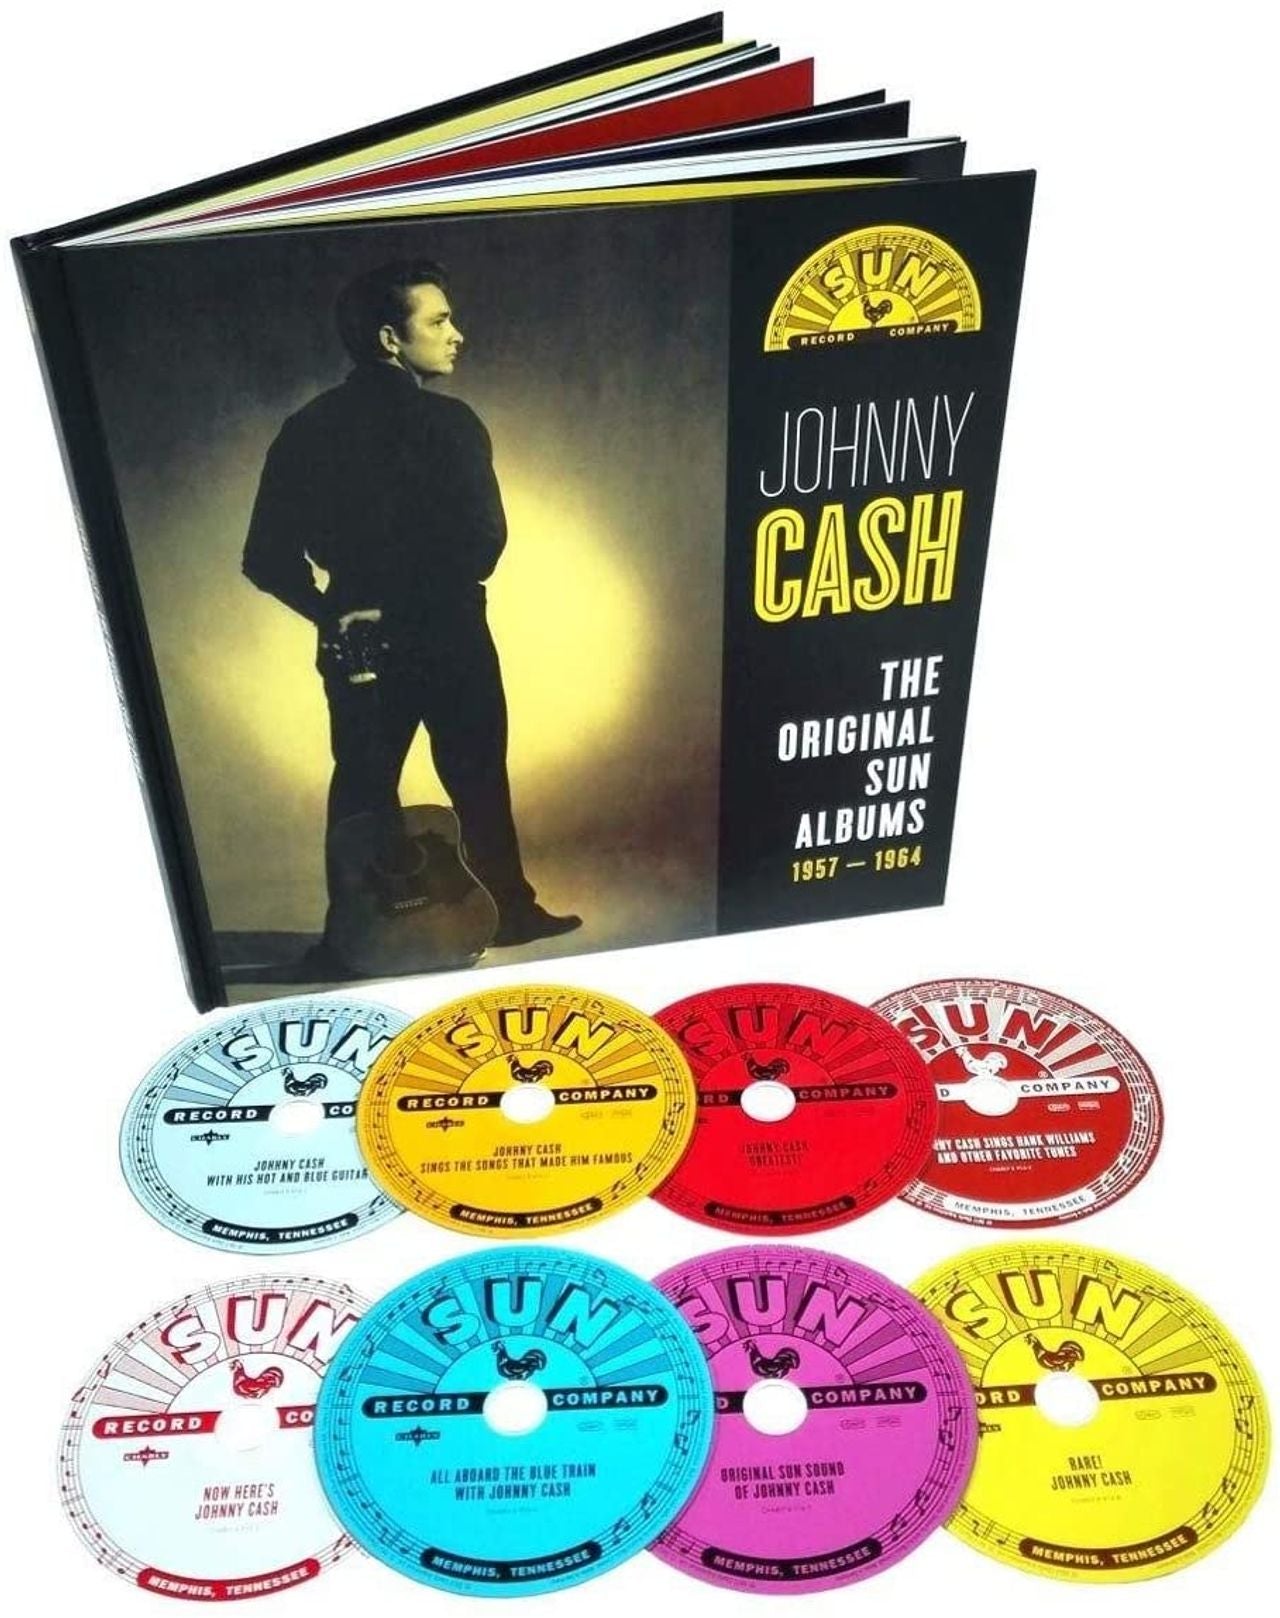 Johnny Cash The Original Sun Albums 1957 - 1964 UK CD Album Box Set 803415891627